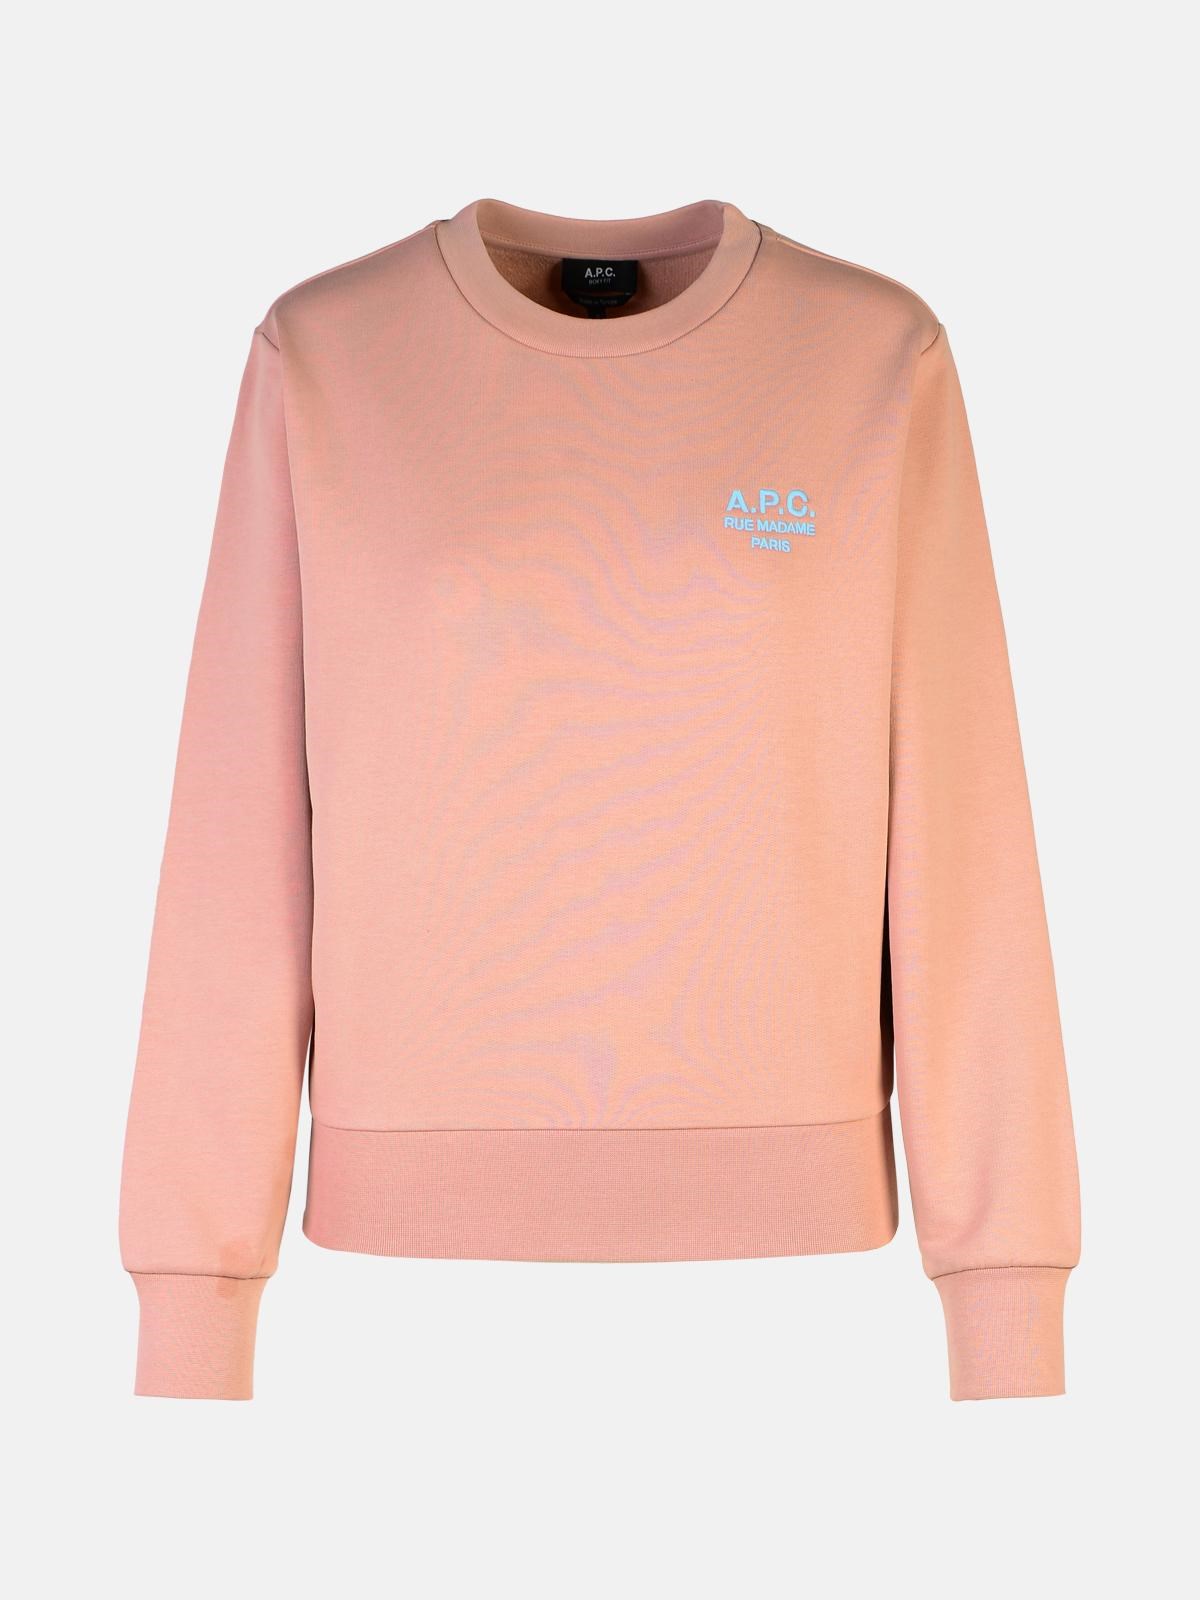 Shop Apc 'rue Madame' Pink Cotton Sweatshirt